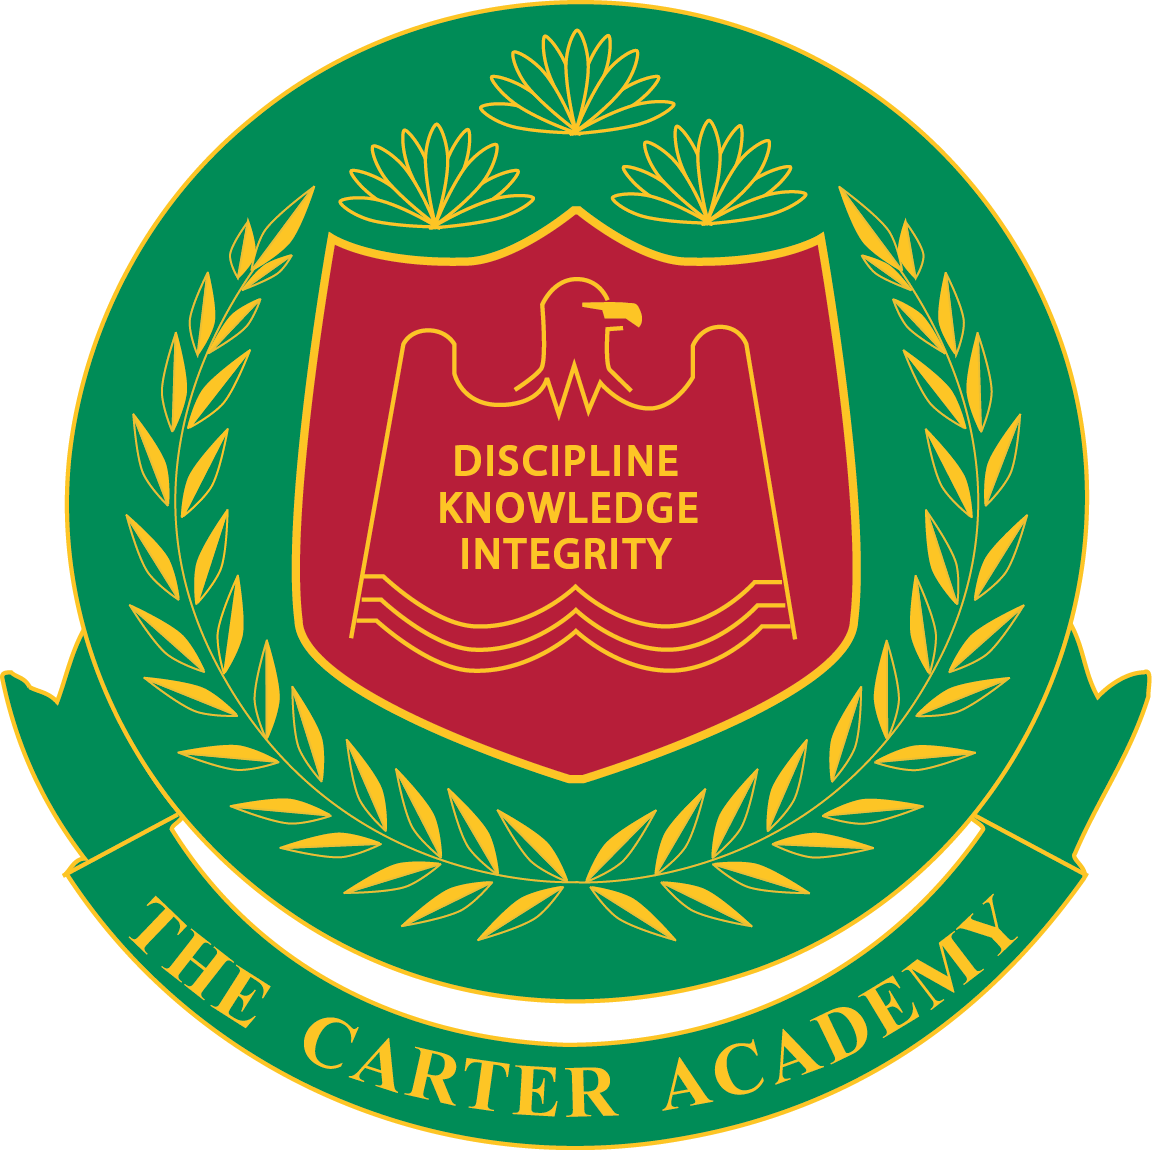 The Carter Academy School & College